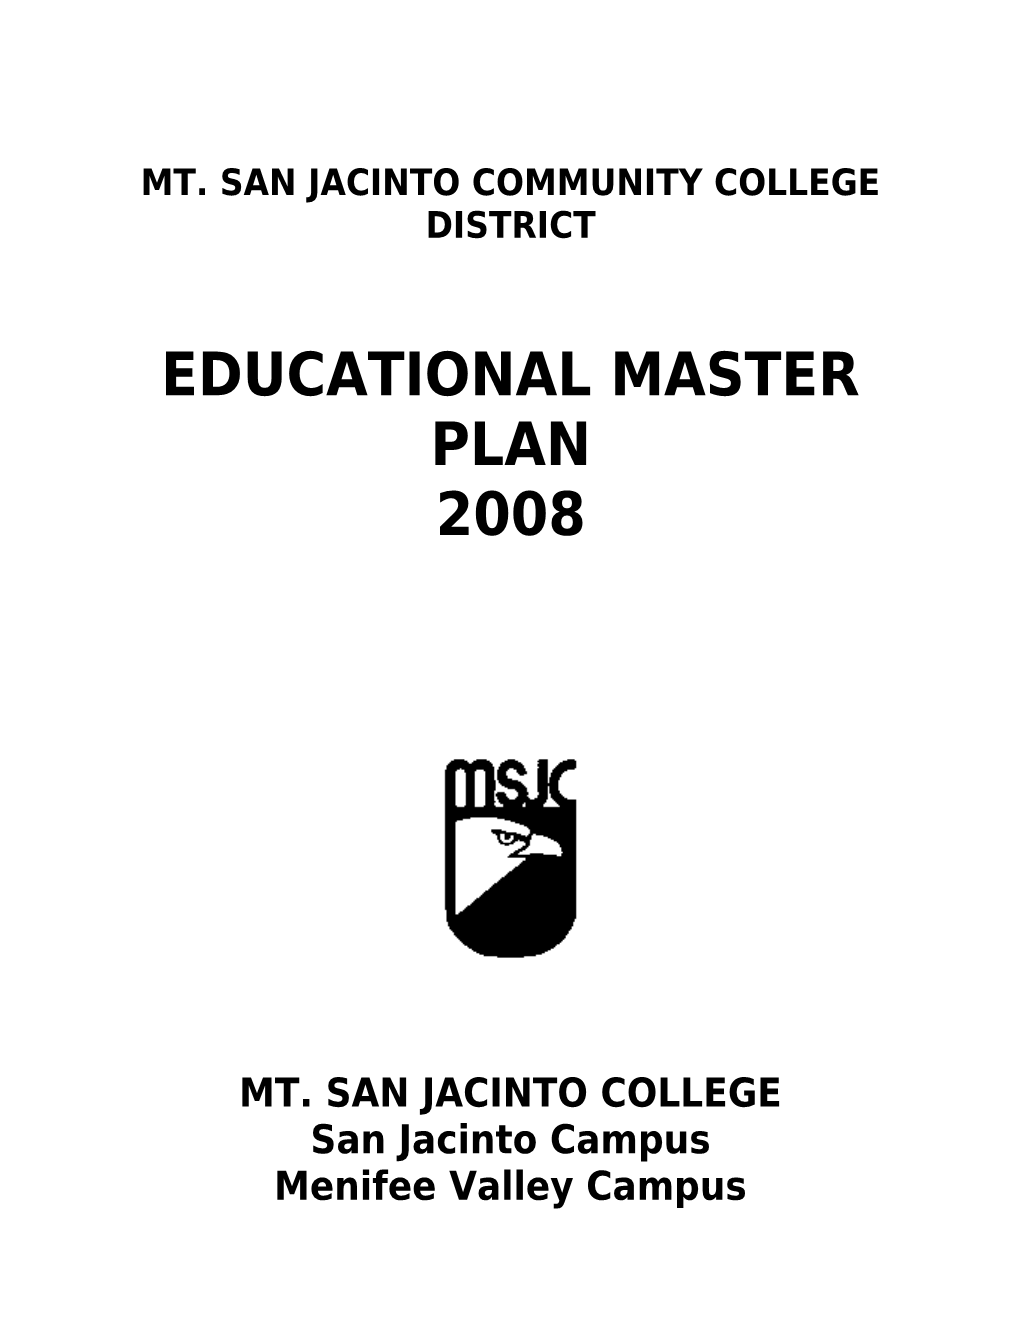 Mt. San Jacintocommunity College District